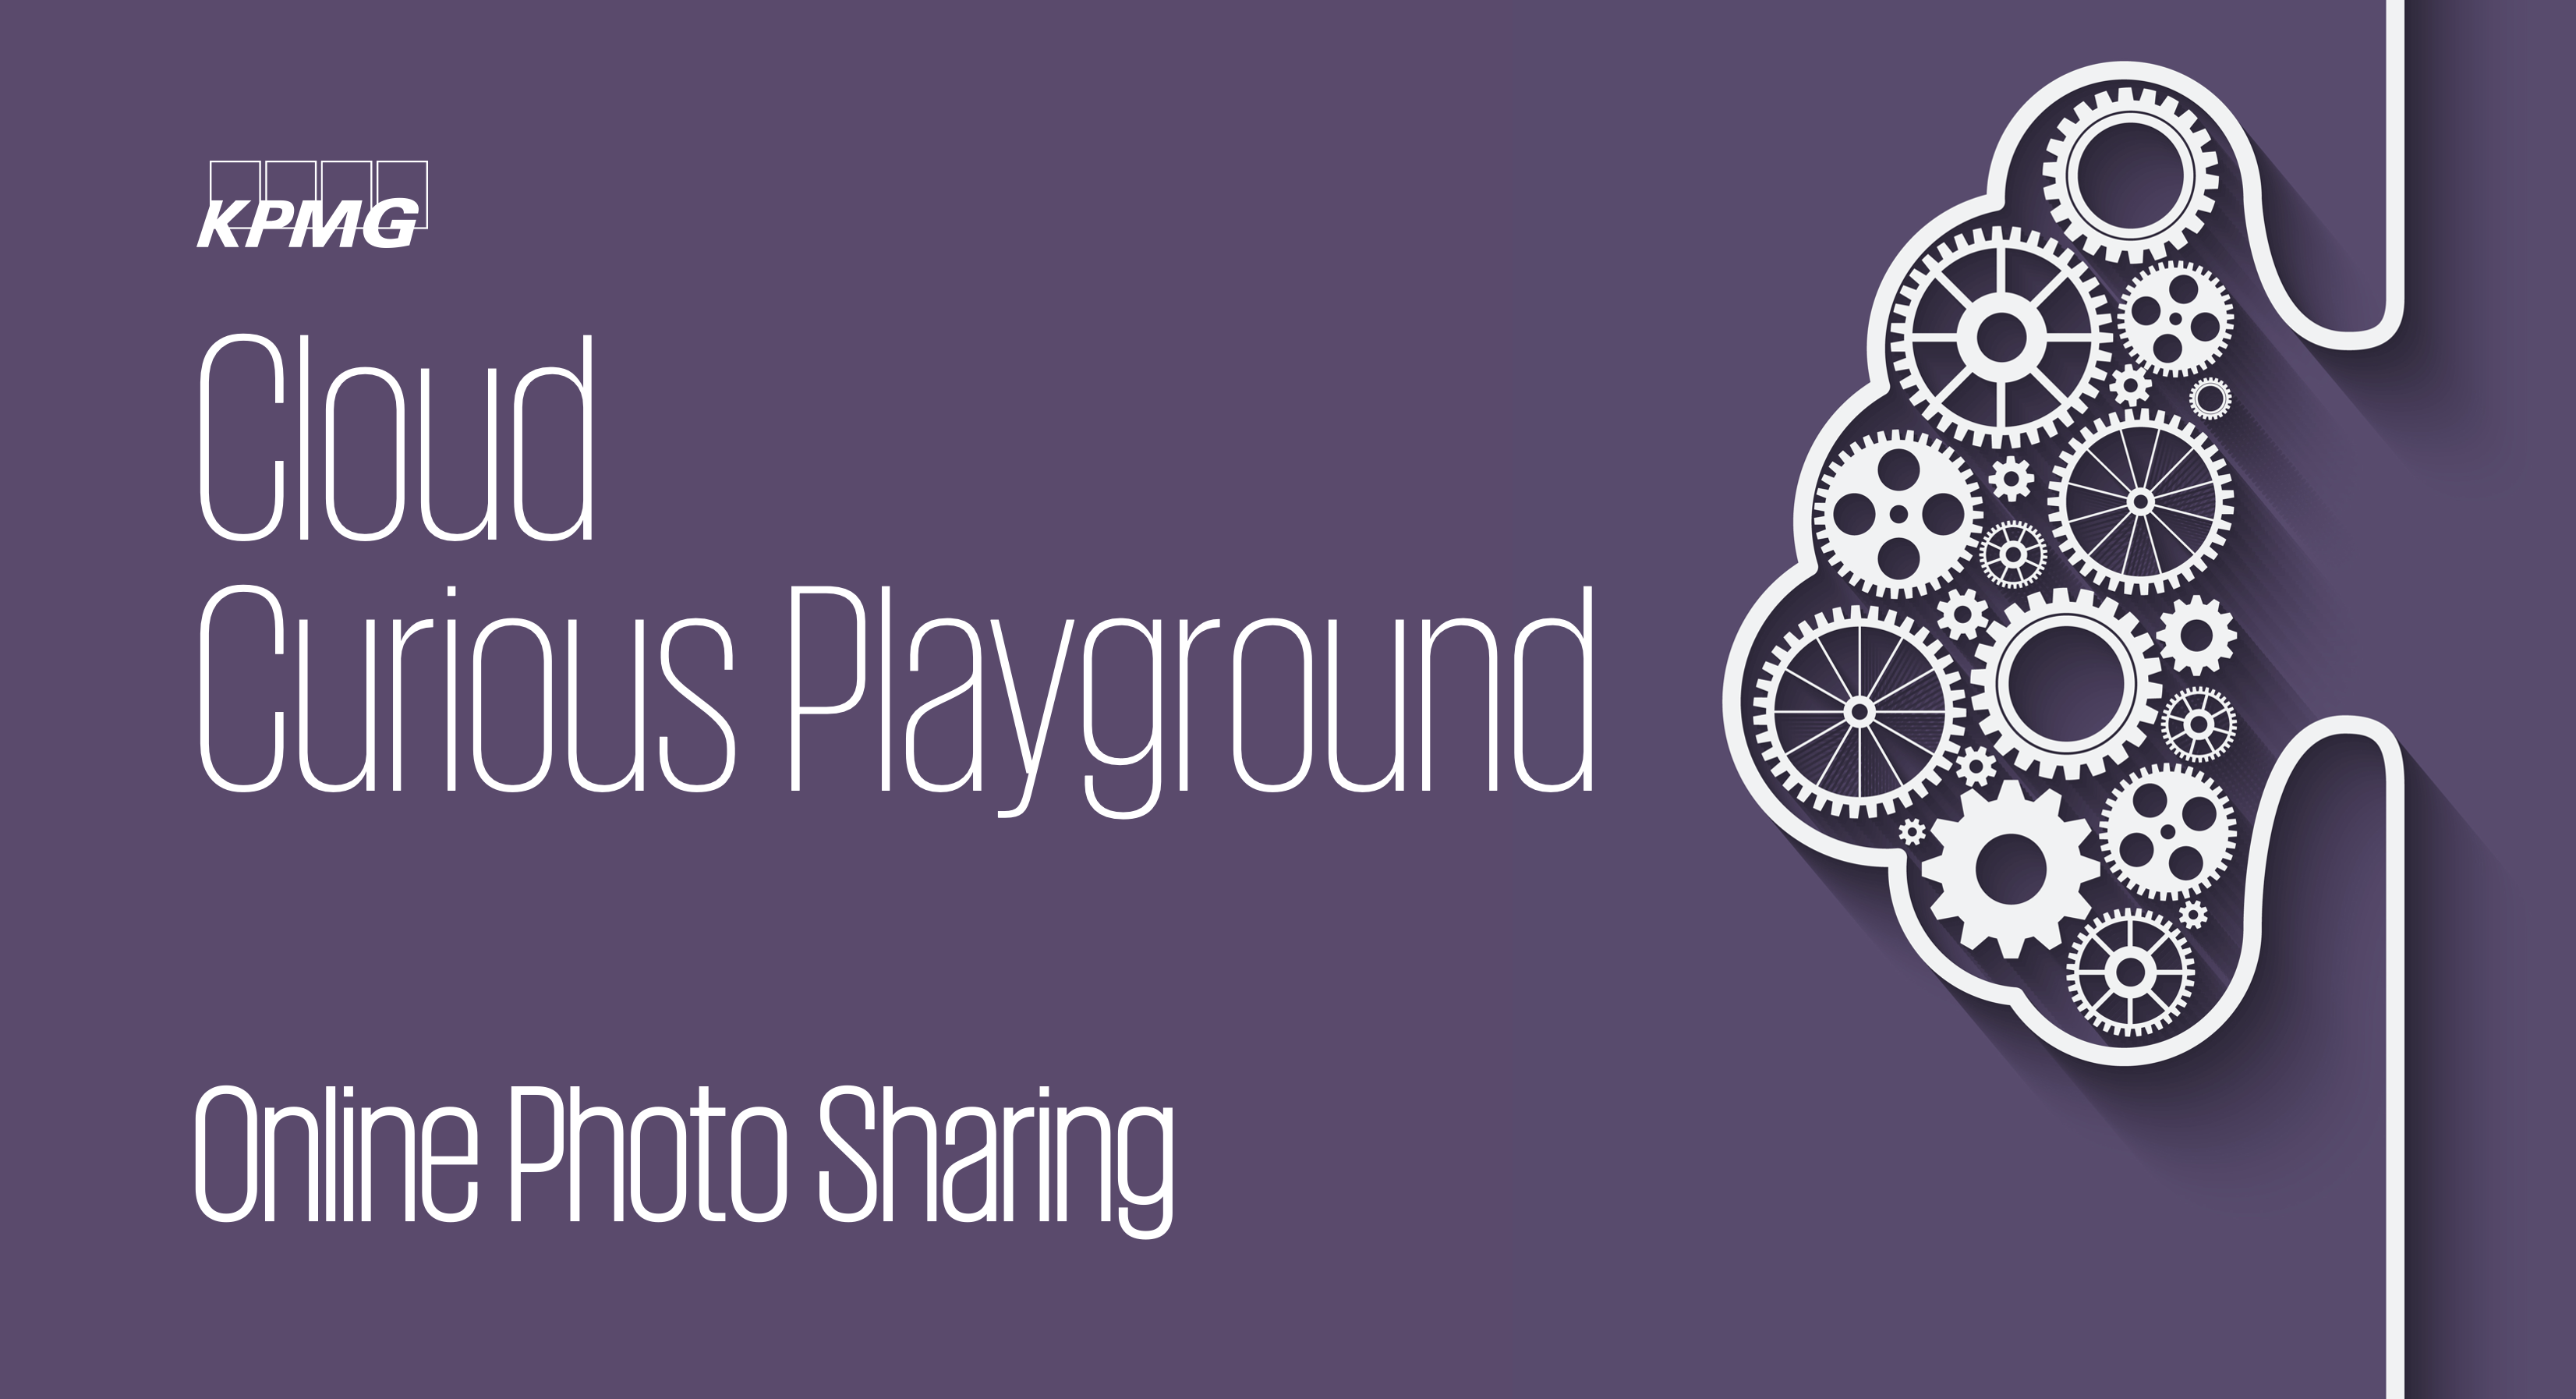 "KPMG Cloud Curious Playground"